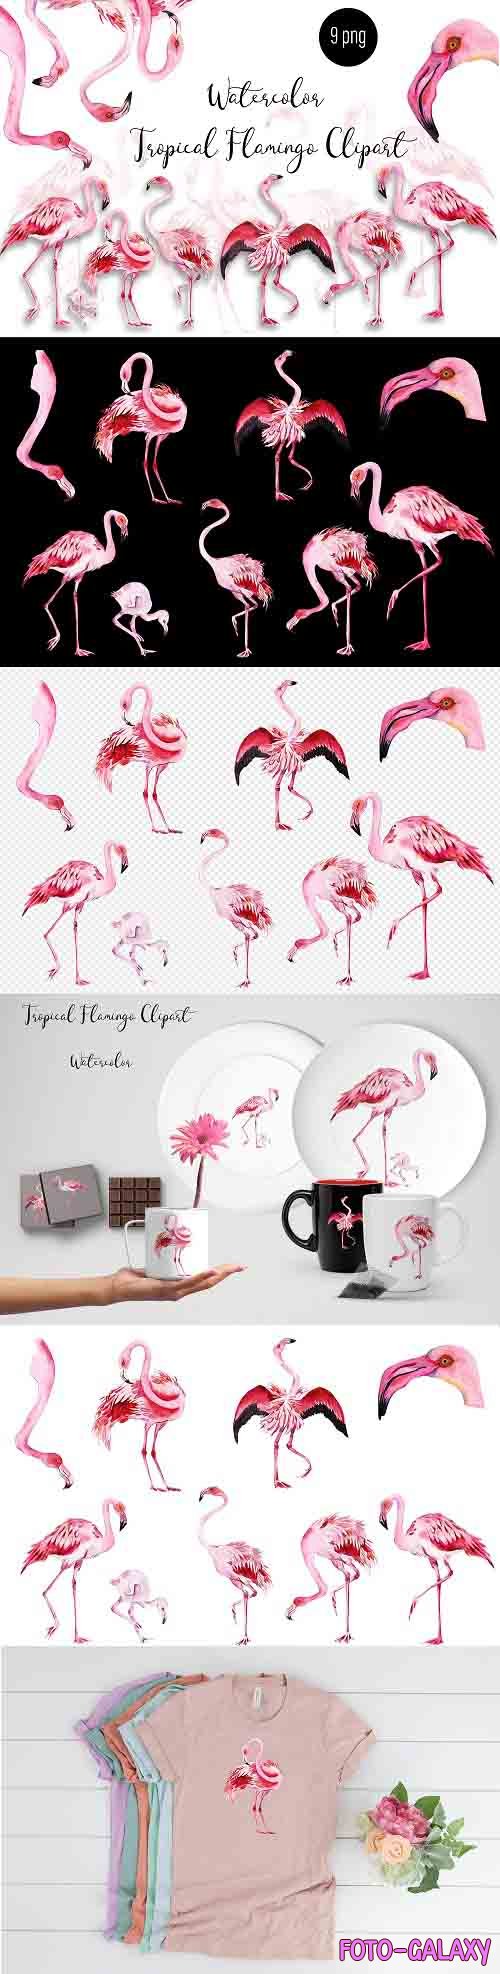 Watercolor tropical Flamingo Clipart - 1356007